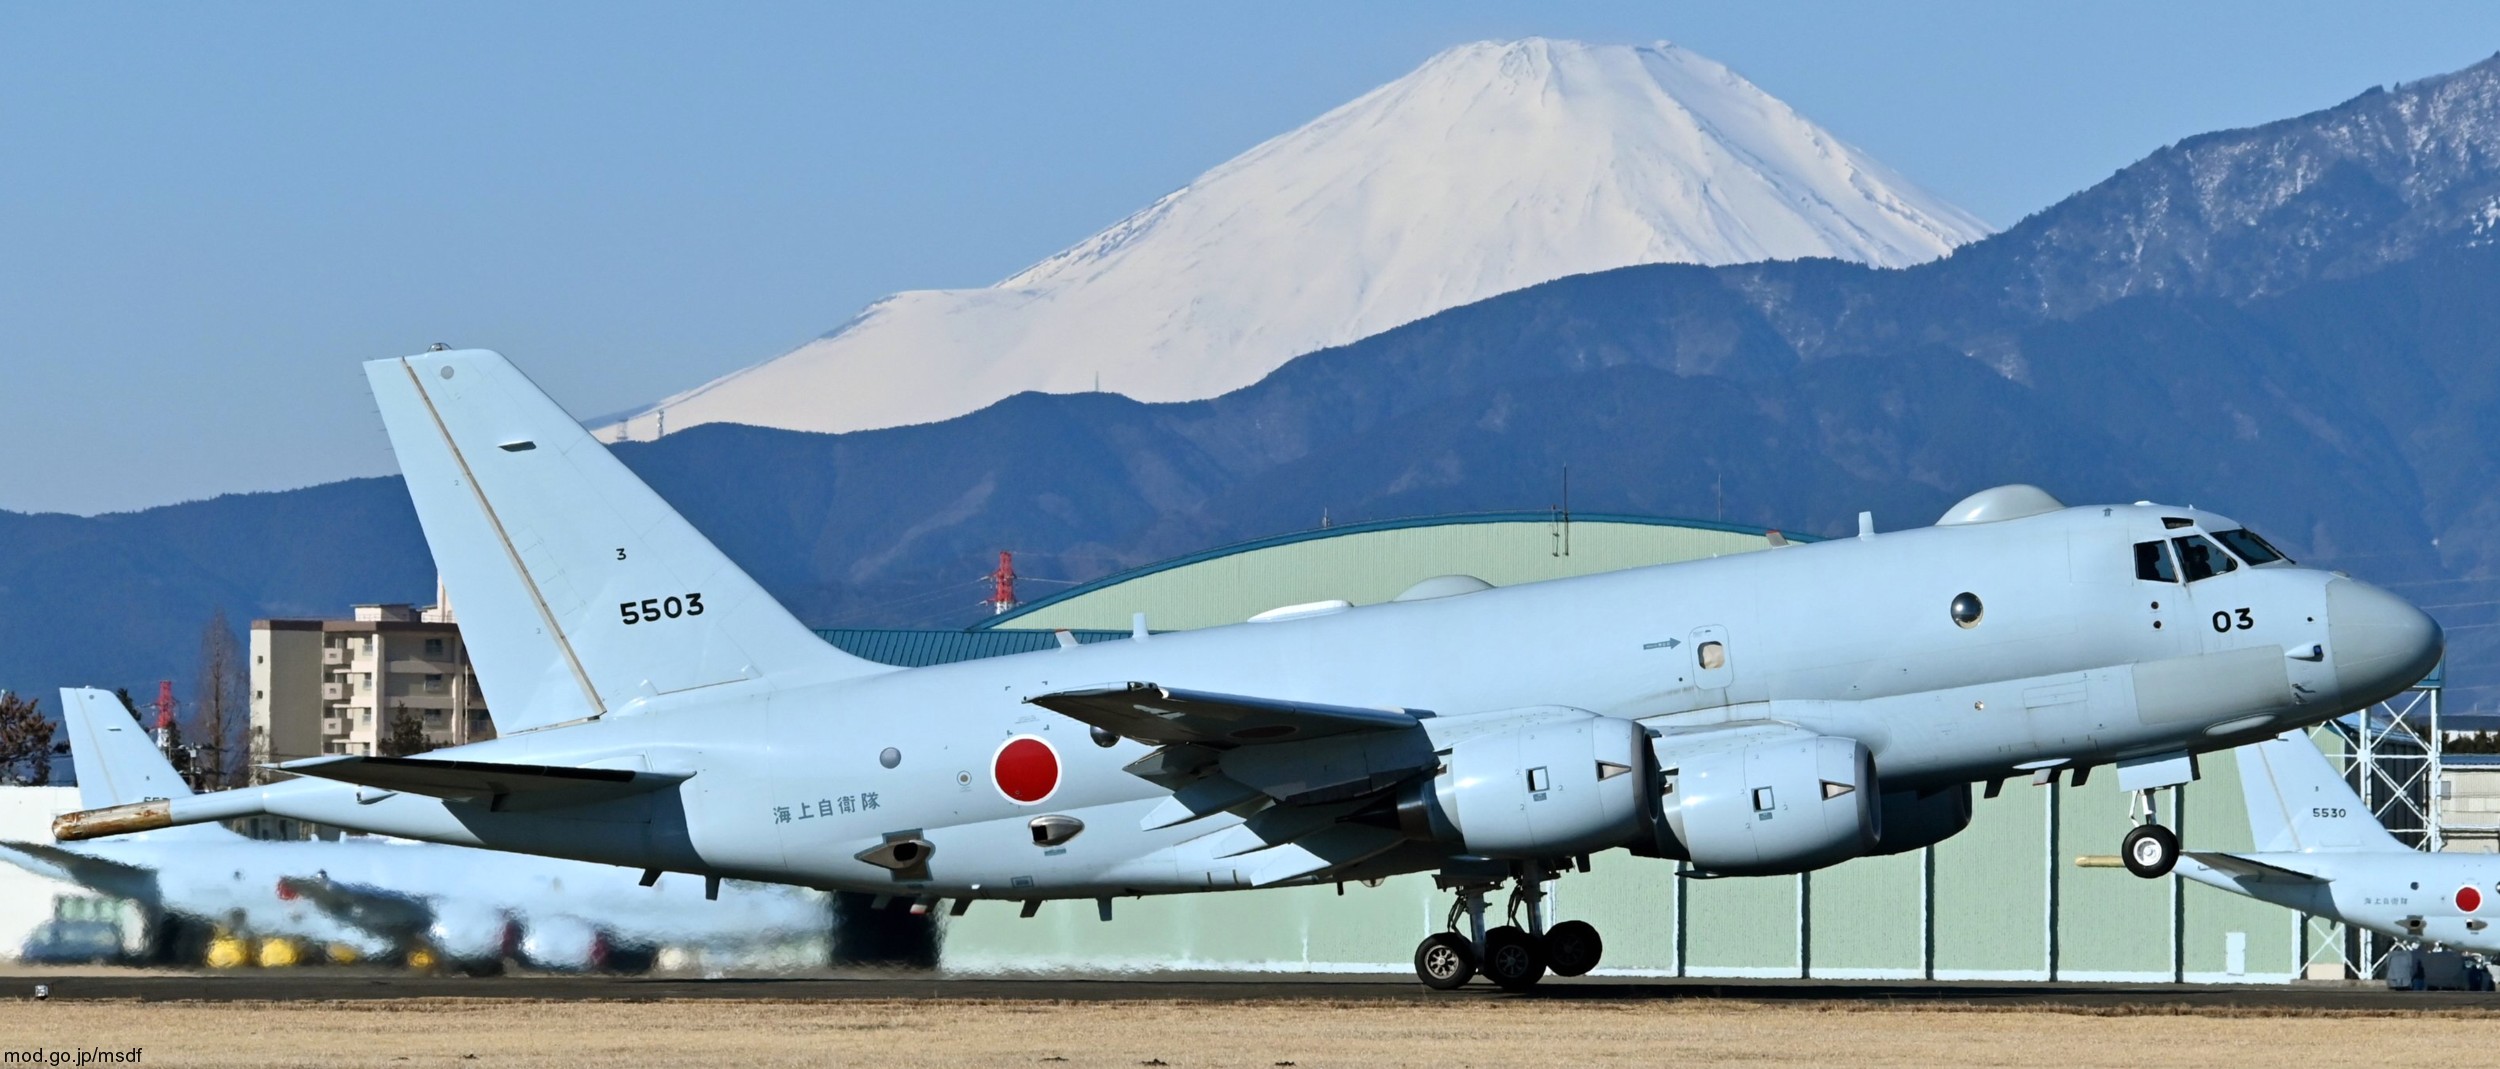 kawasaki p-1 patrol aircraft mpa japan maritime self defense force jmsdf 5503 04